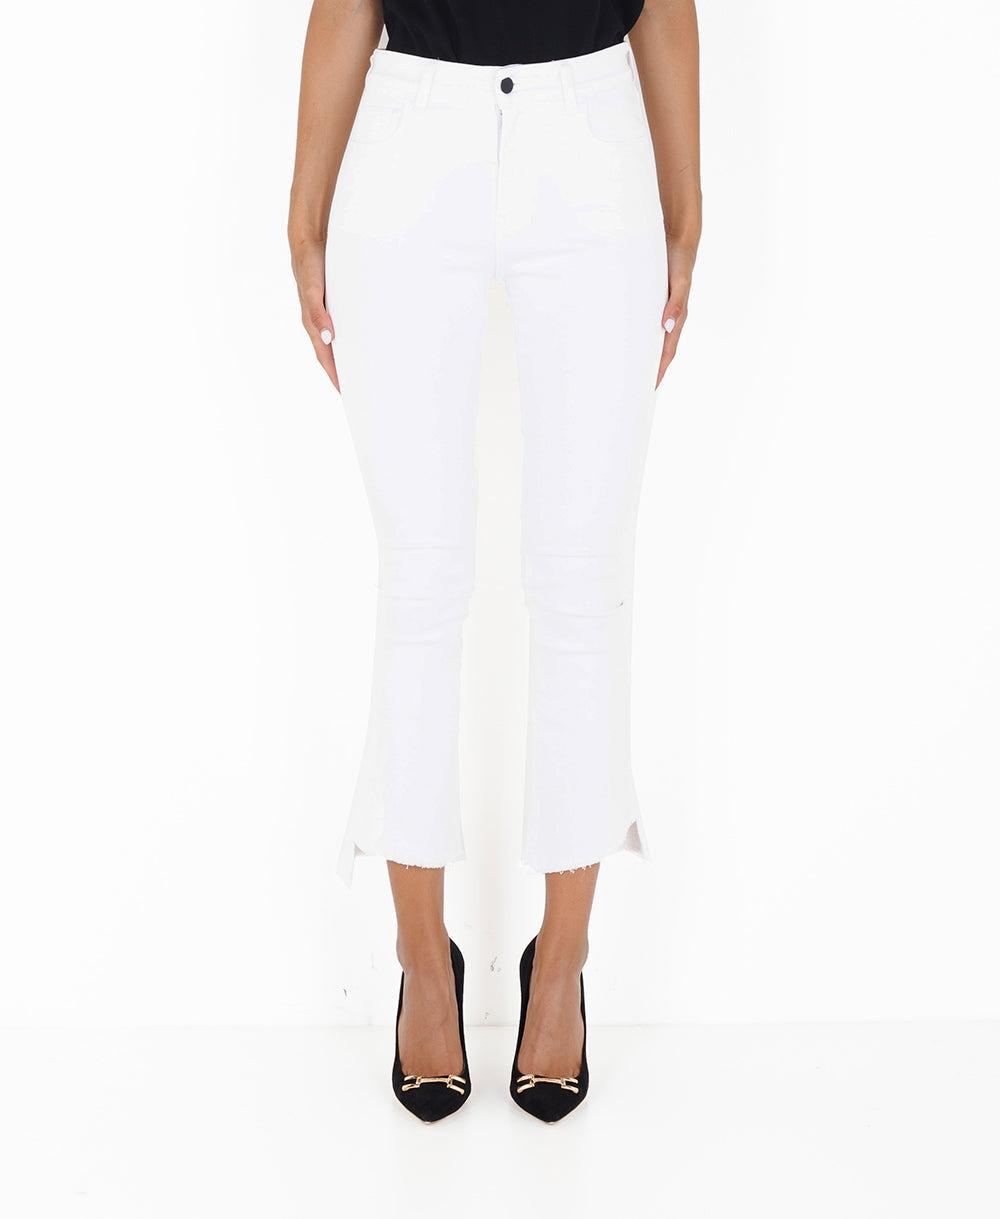 Liviana Conti Jeans Flare F2wy50 in White | Lyst